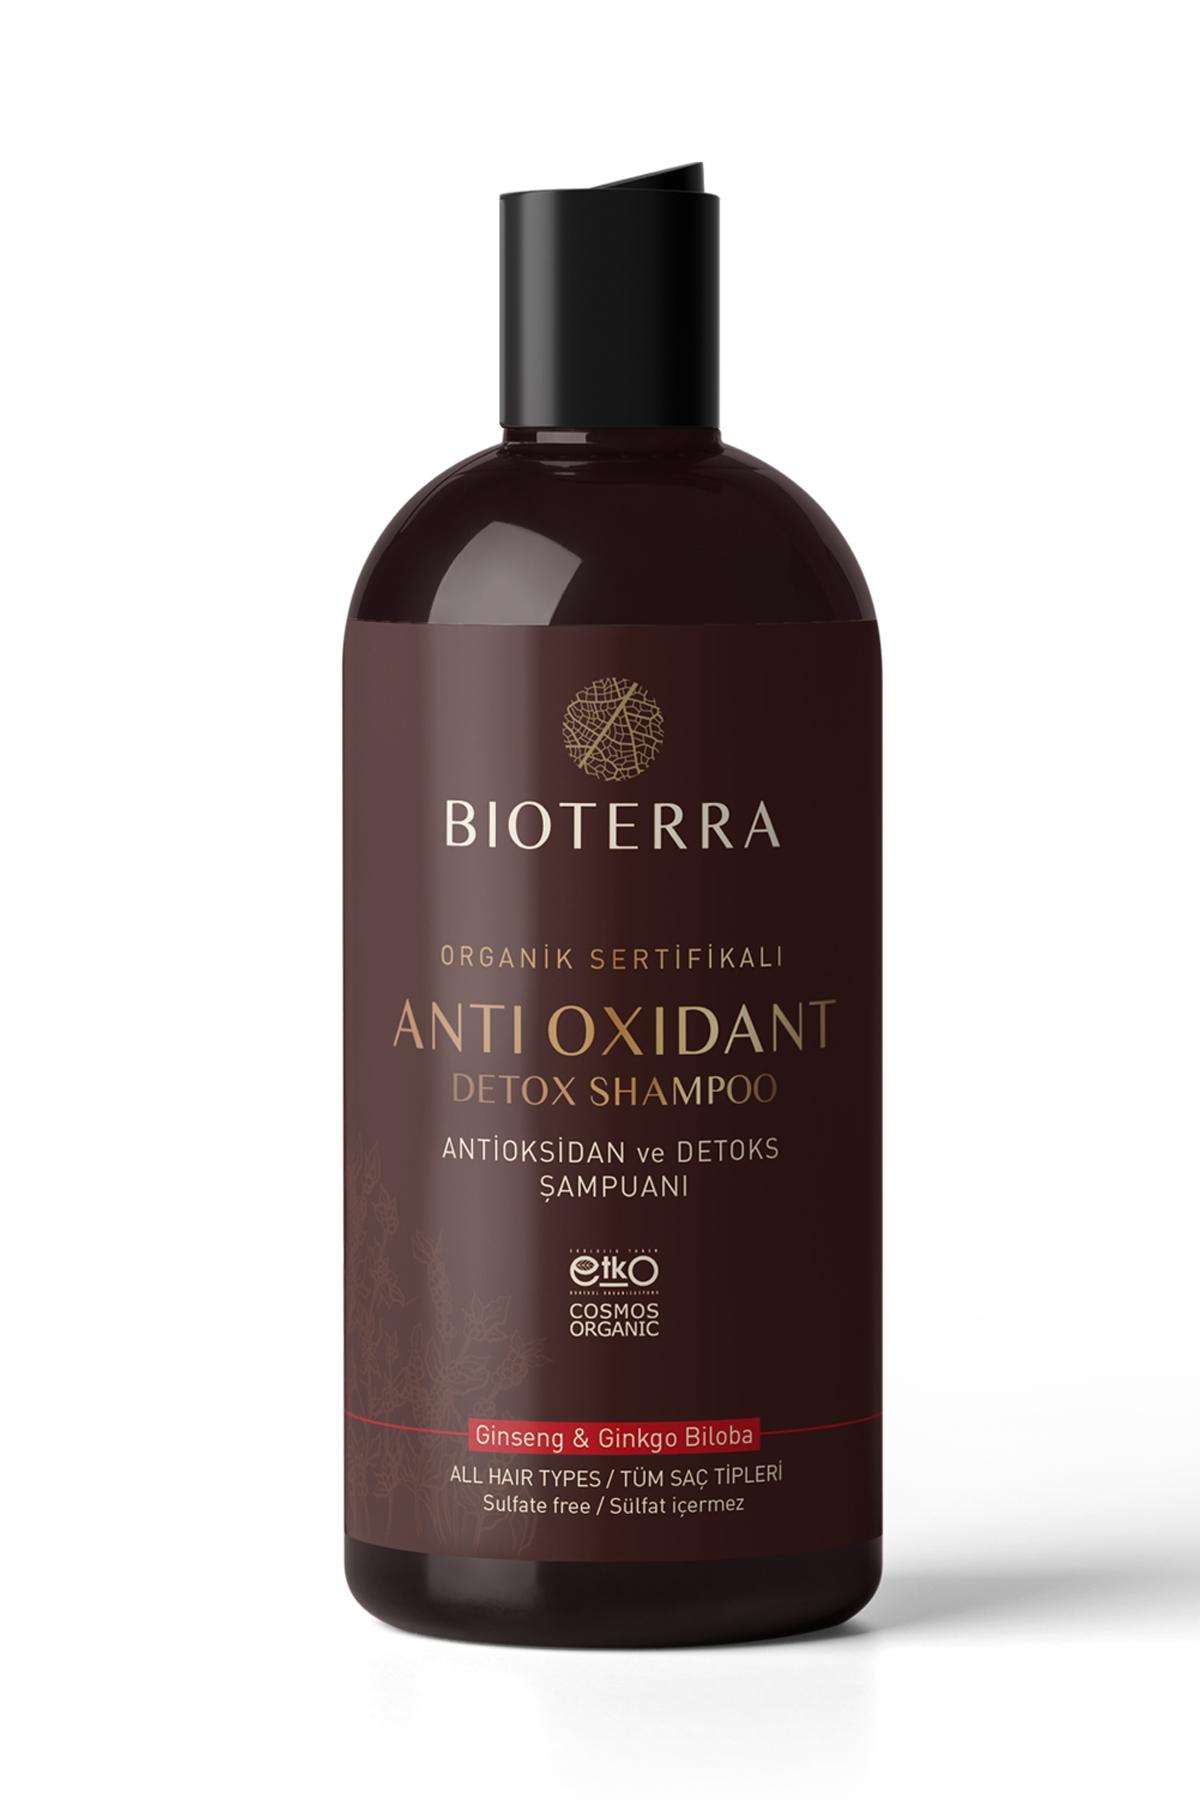 Detox Anti Oxidant Shampoo 400 ml, Bioterra Organic Ginseng Shampoo